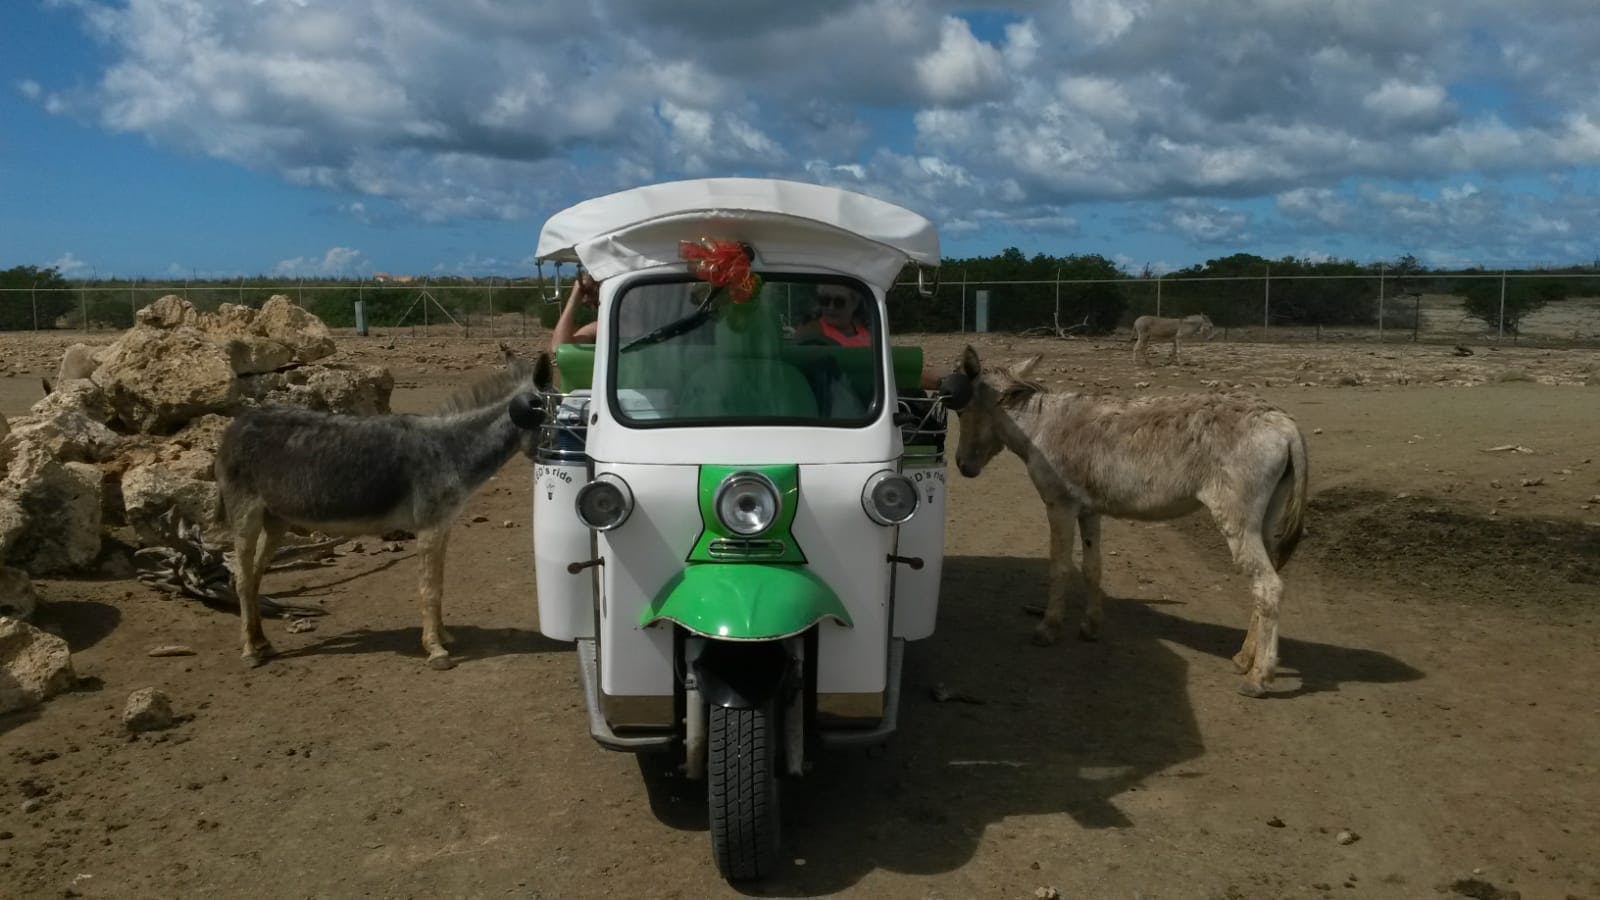 Donkey sanctuary visit by tuk Musement